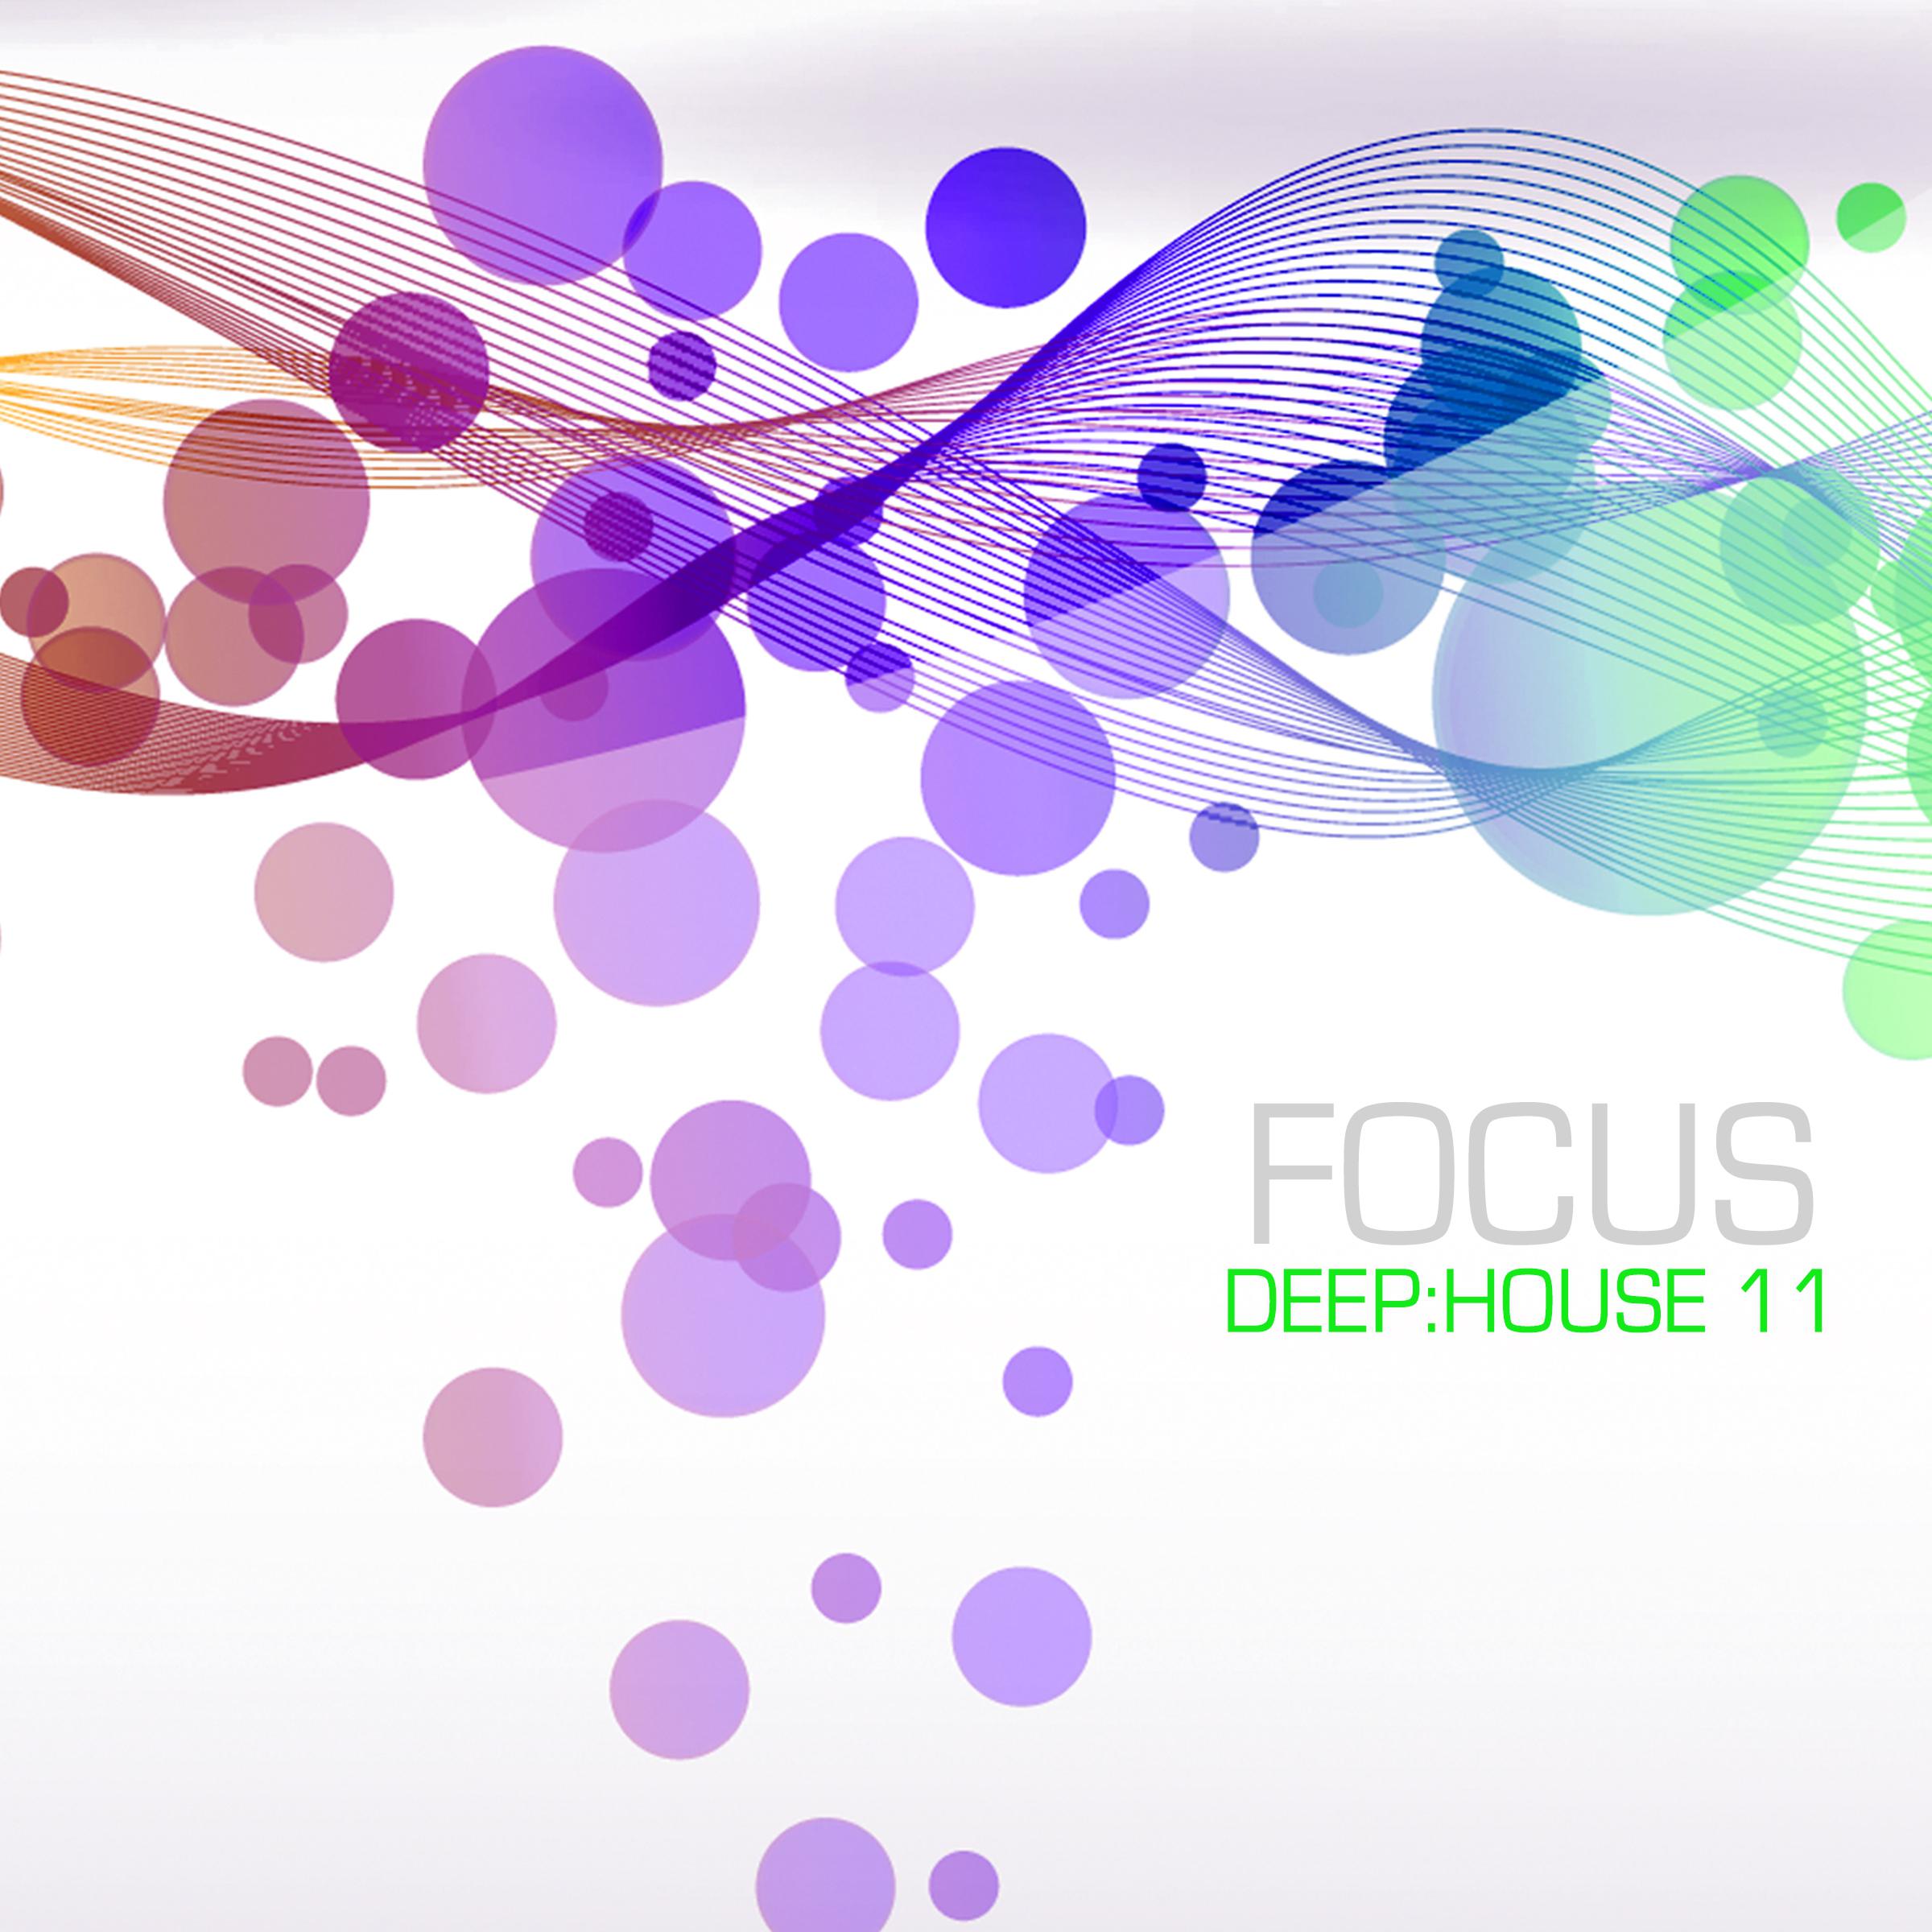 Focus Deep:House, Vol. 11